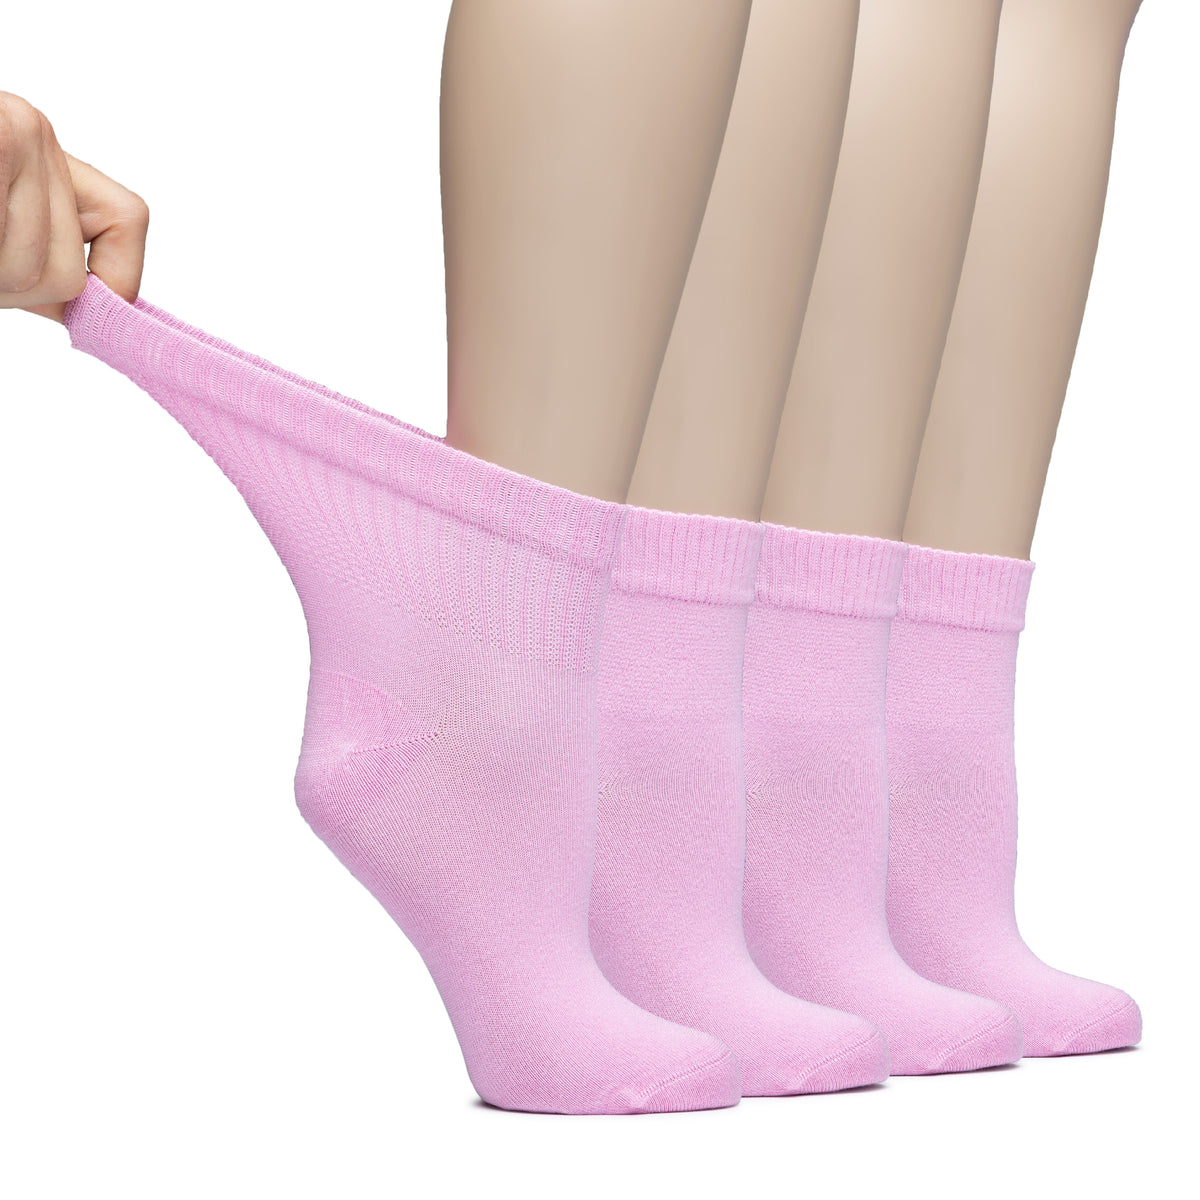 Hugh Ugoli Lightweight Women's Diabetic Ankle Socks Bamboo Thin Socks Seamless Toe and Non-Binding Top, 4 Pairs, , Shoe Size: 6-9/10-12 | Shoe Size: 10-12 | Pink